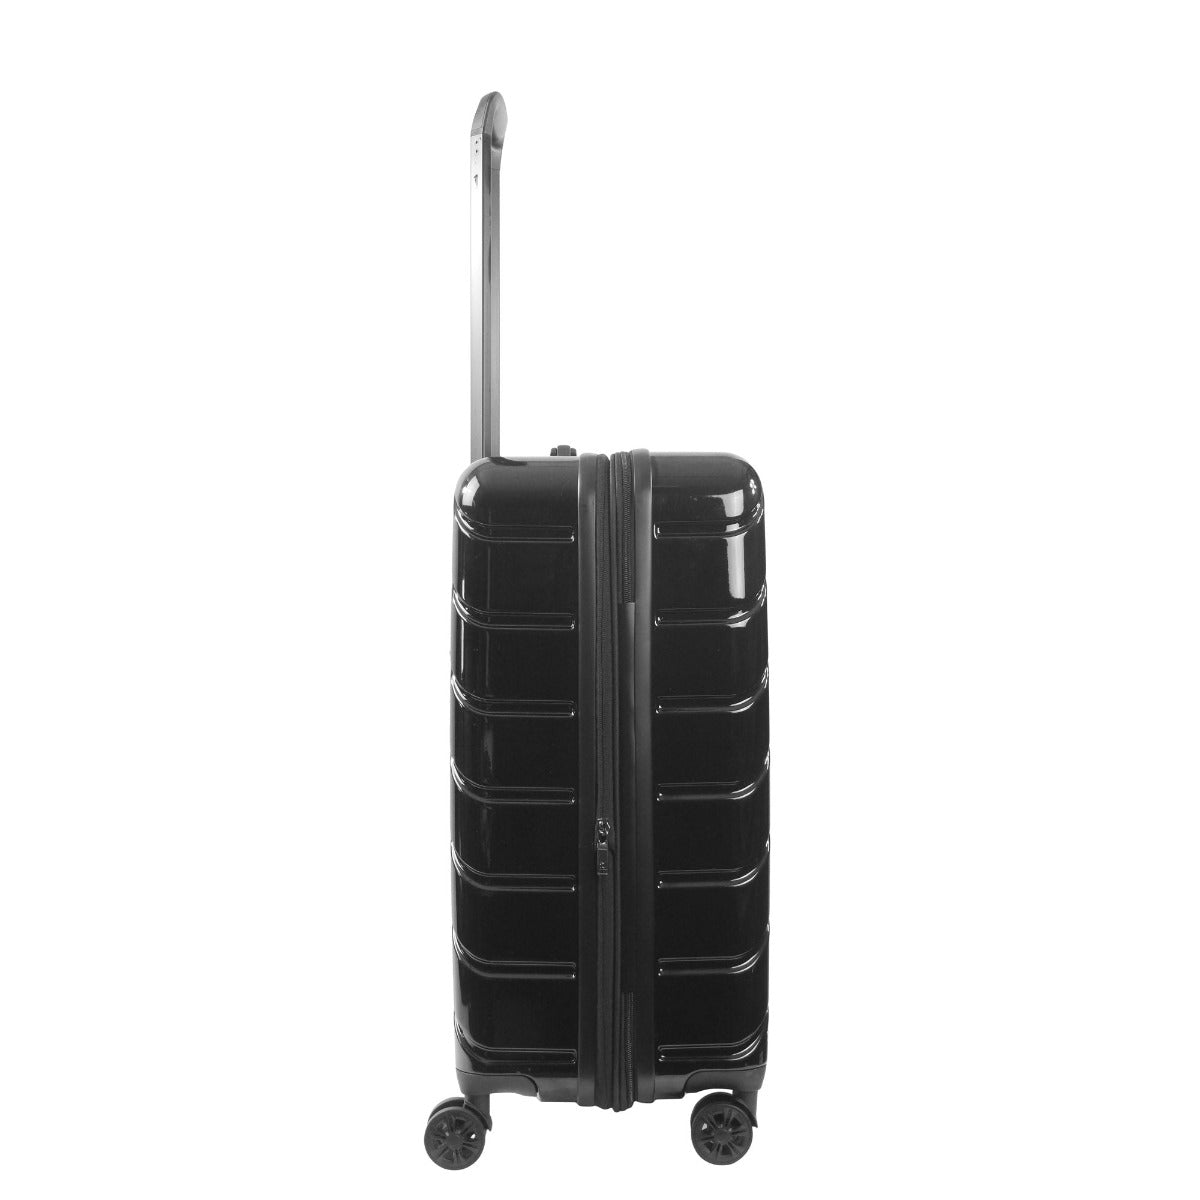 Velocity 27 inch hardside spinner suitcase black checked luggage